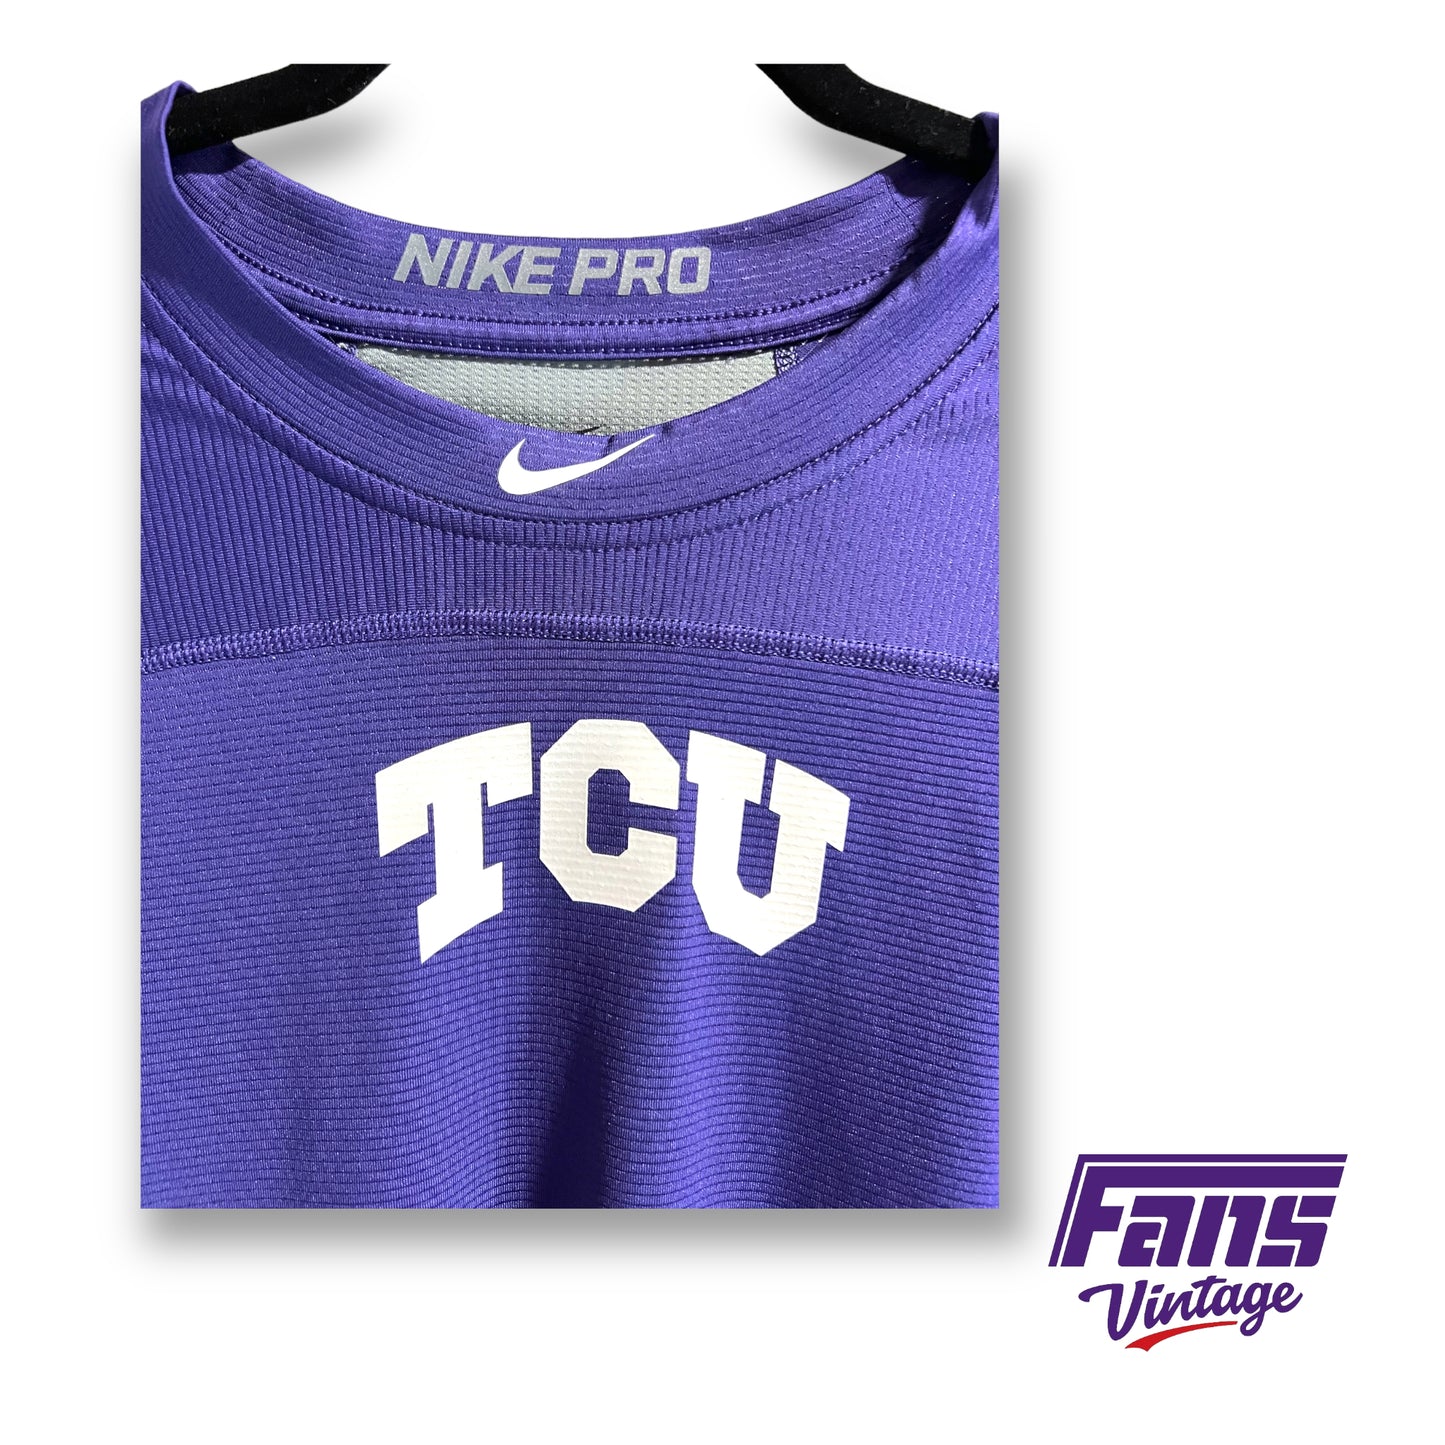 Nike Pro TCU Baseball 3/4 sleeve dri-fit shirt